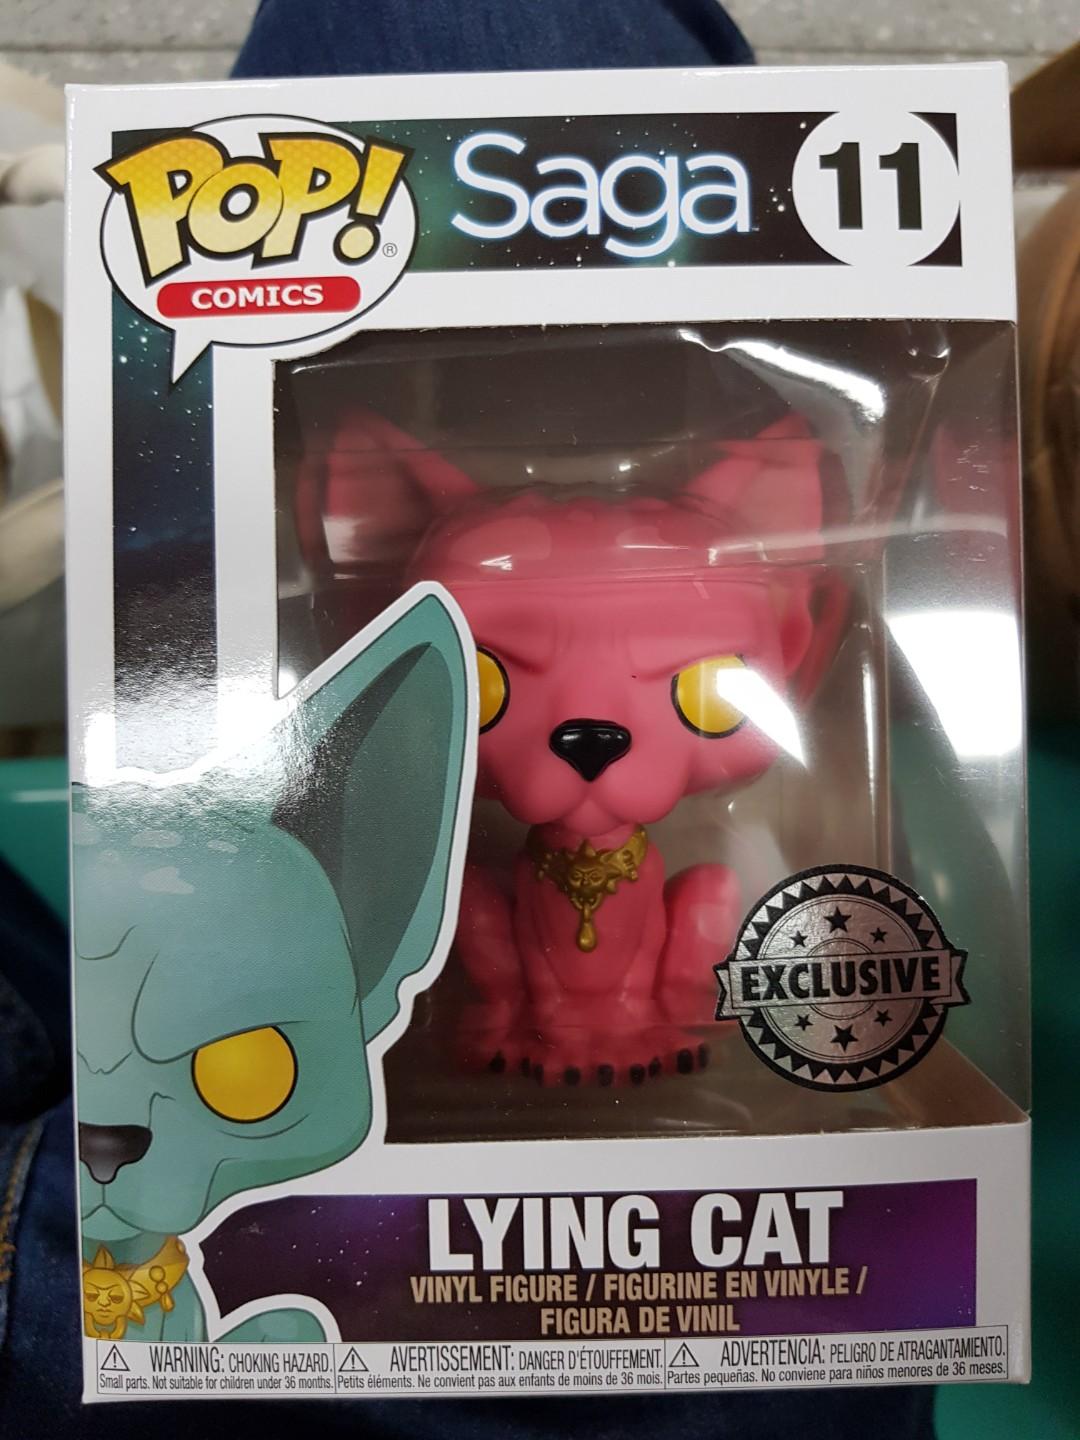 Funko Pop Comics Saga 11 Barnes and Noble Pink Lying Cat Figure Vinyl for sale online 